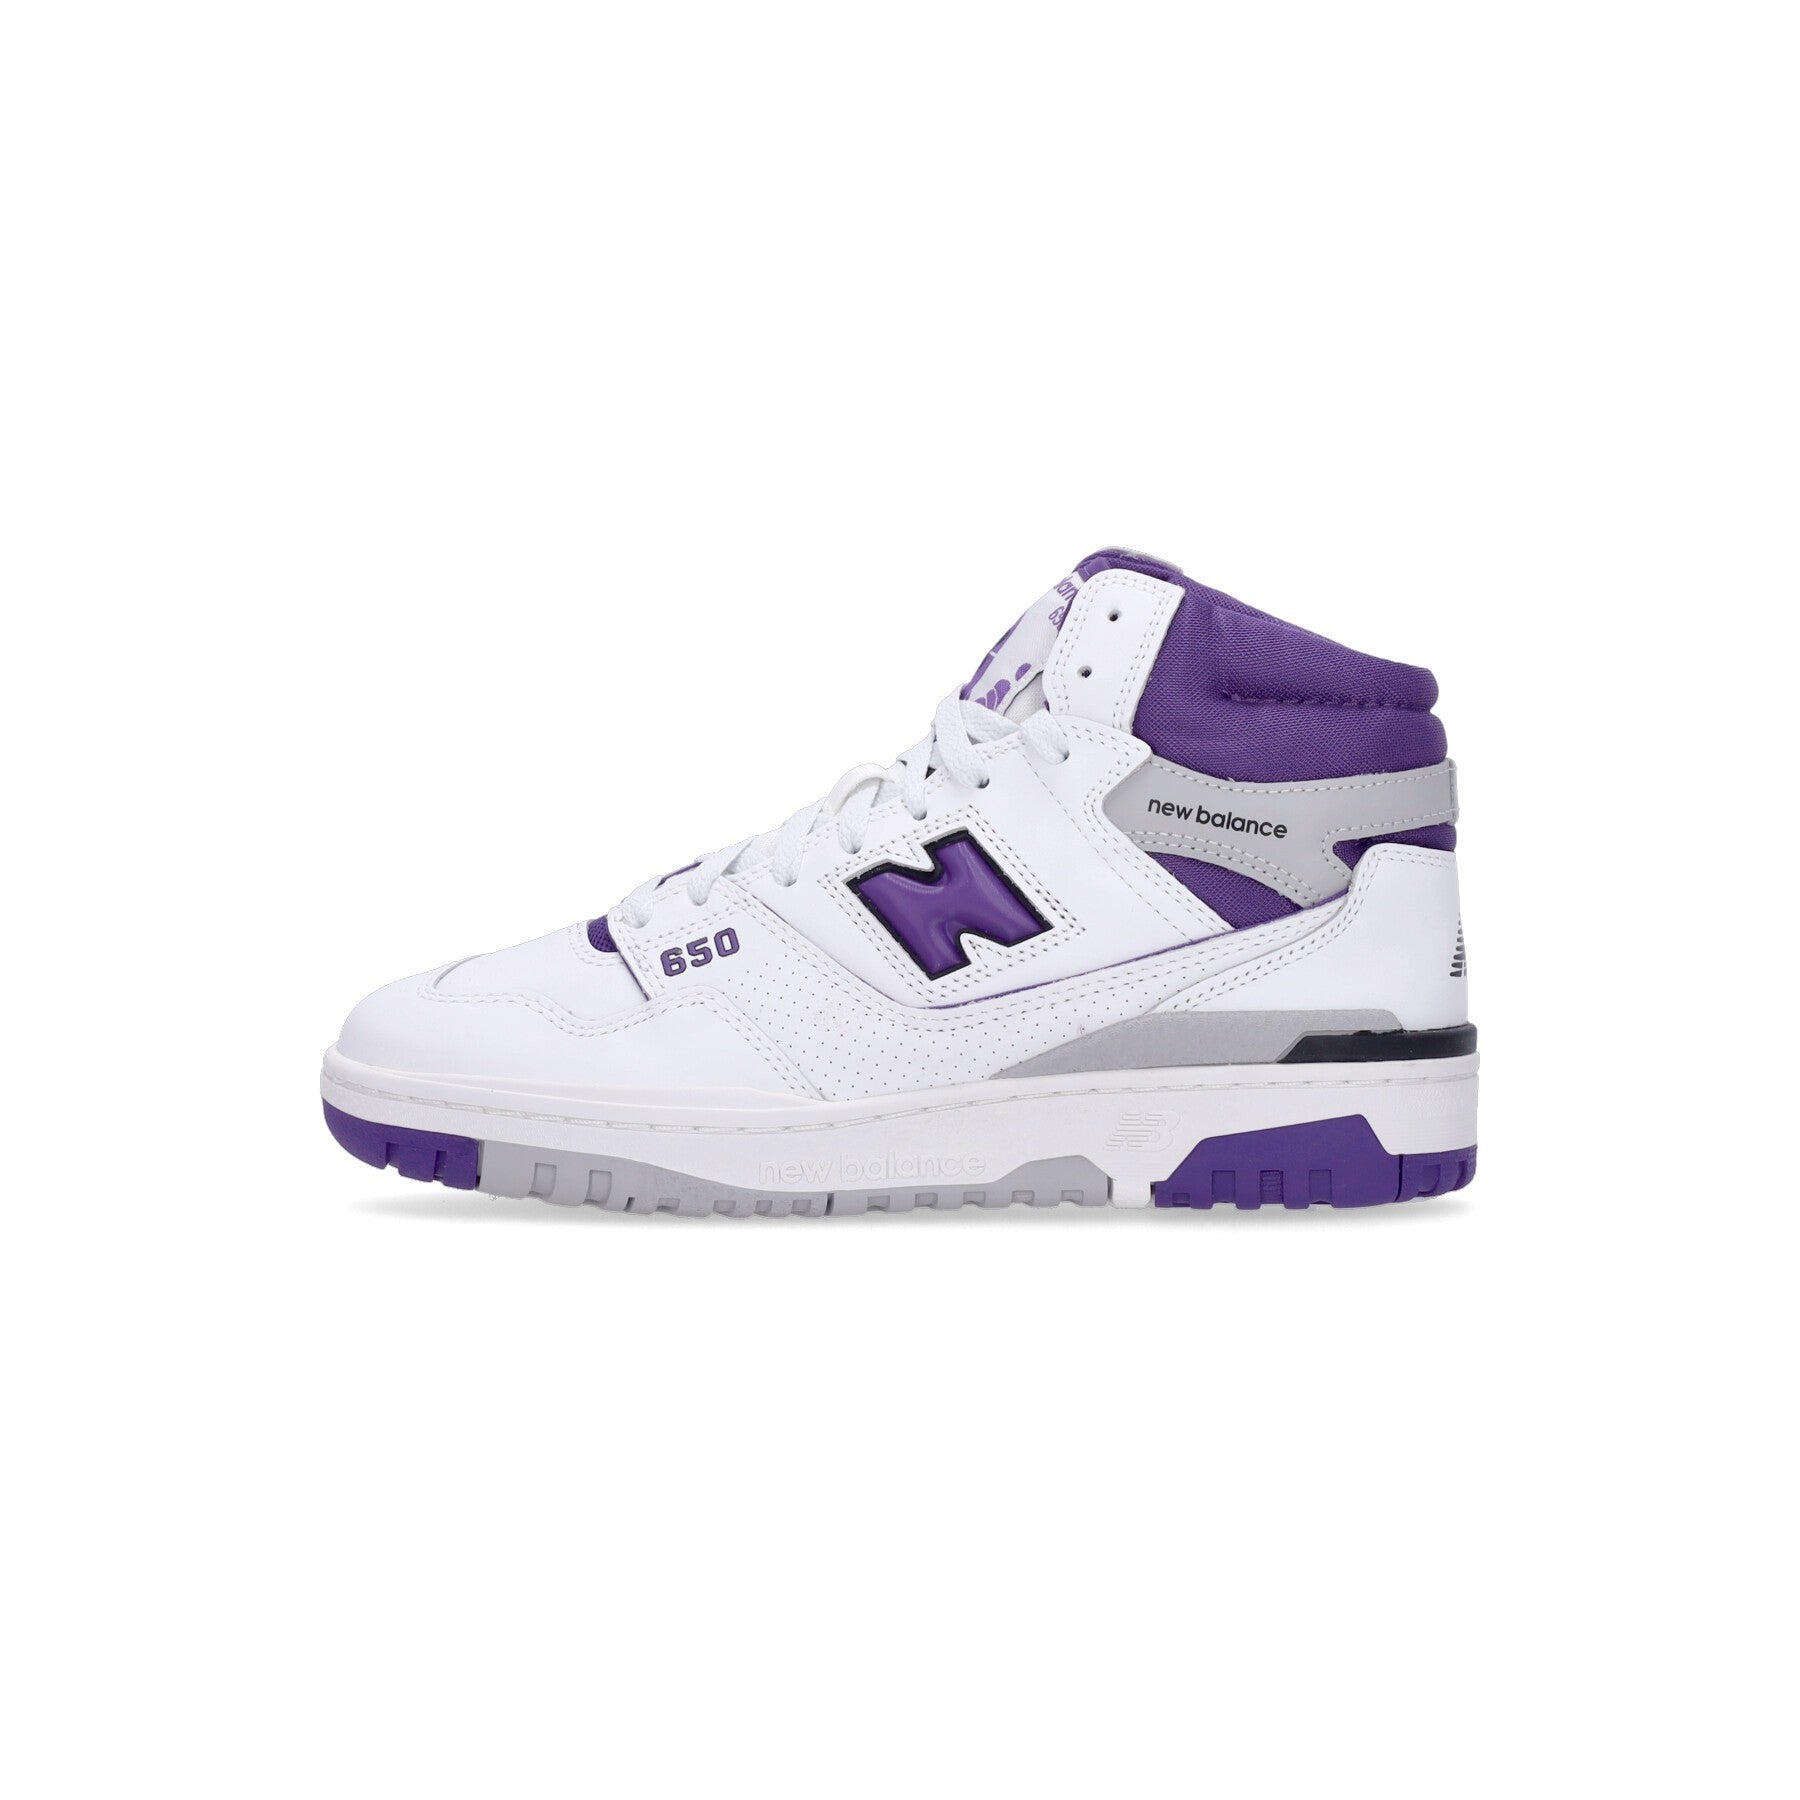 New Balance, Scarpa Alta Uomo 650, White/purple